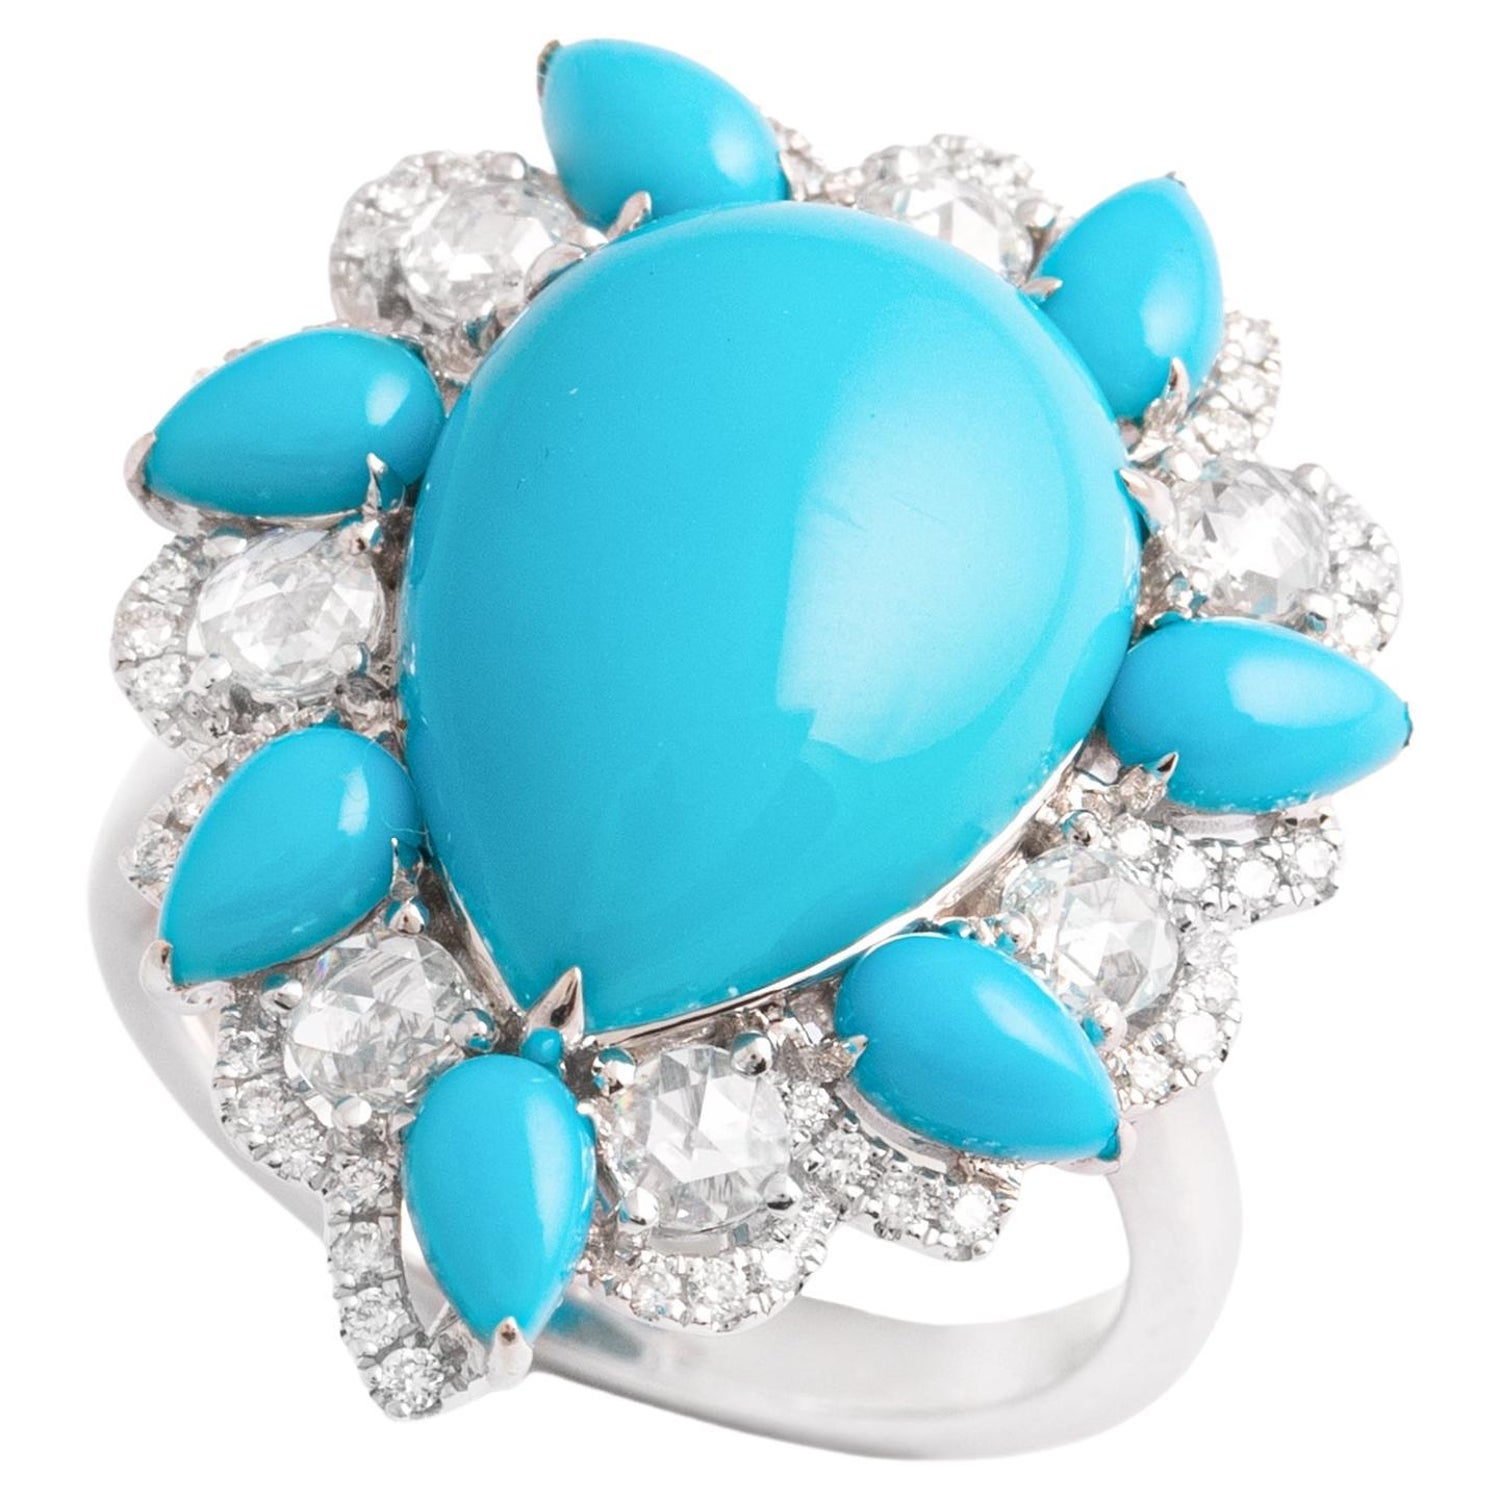 Sleeping Beauty Turquoise: Unearth Gemstone Elegance!